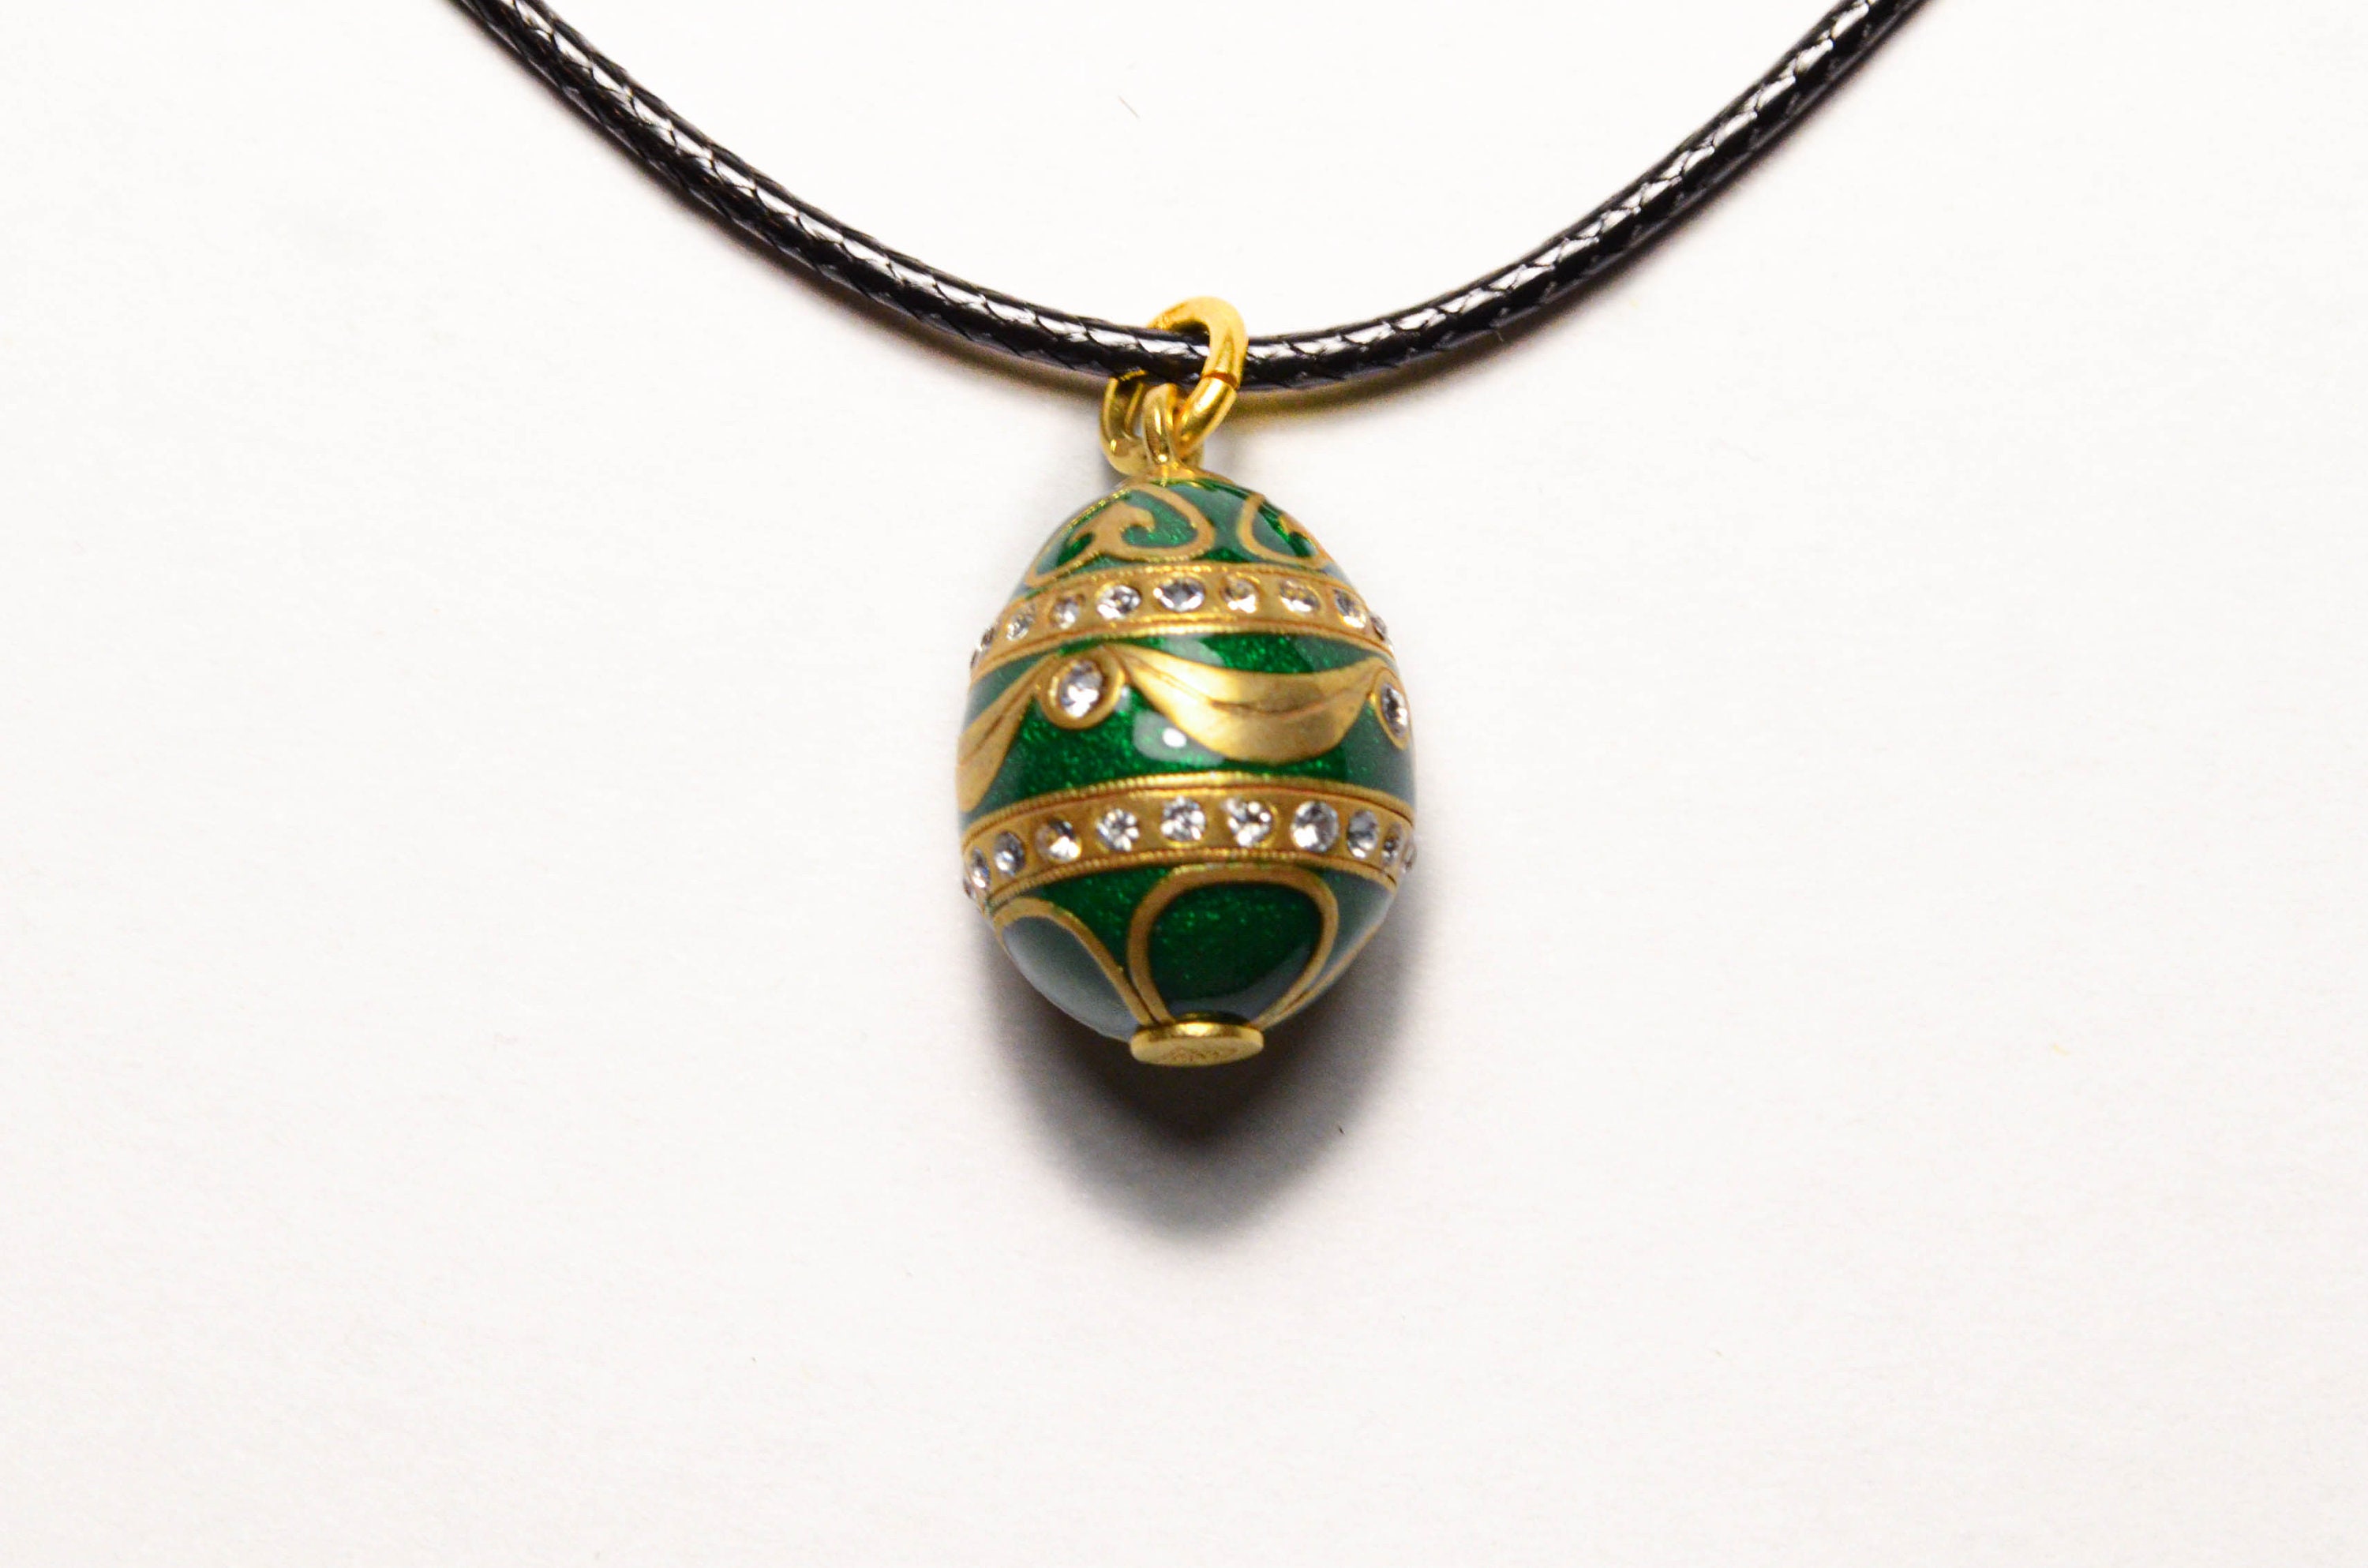 Egg Pendant Necklace Faberge Style. Decorated with Swarovski | Etsy